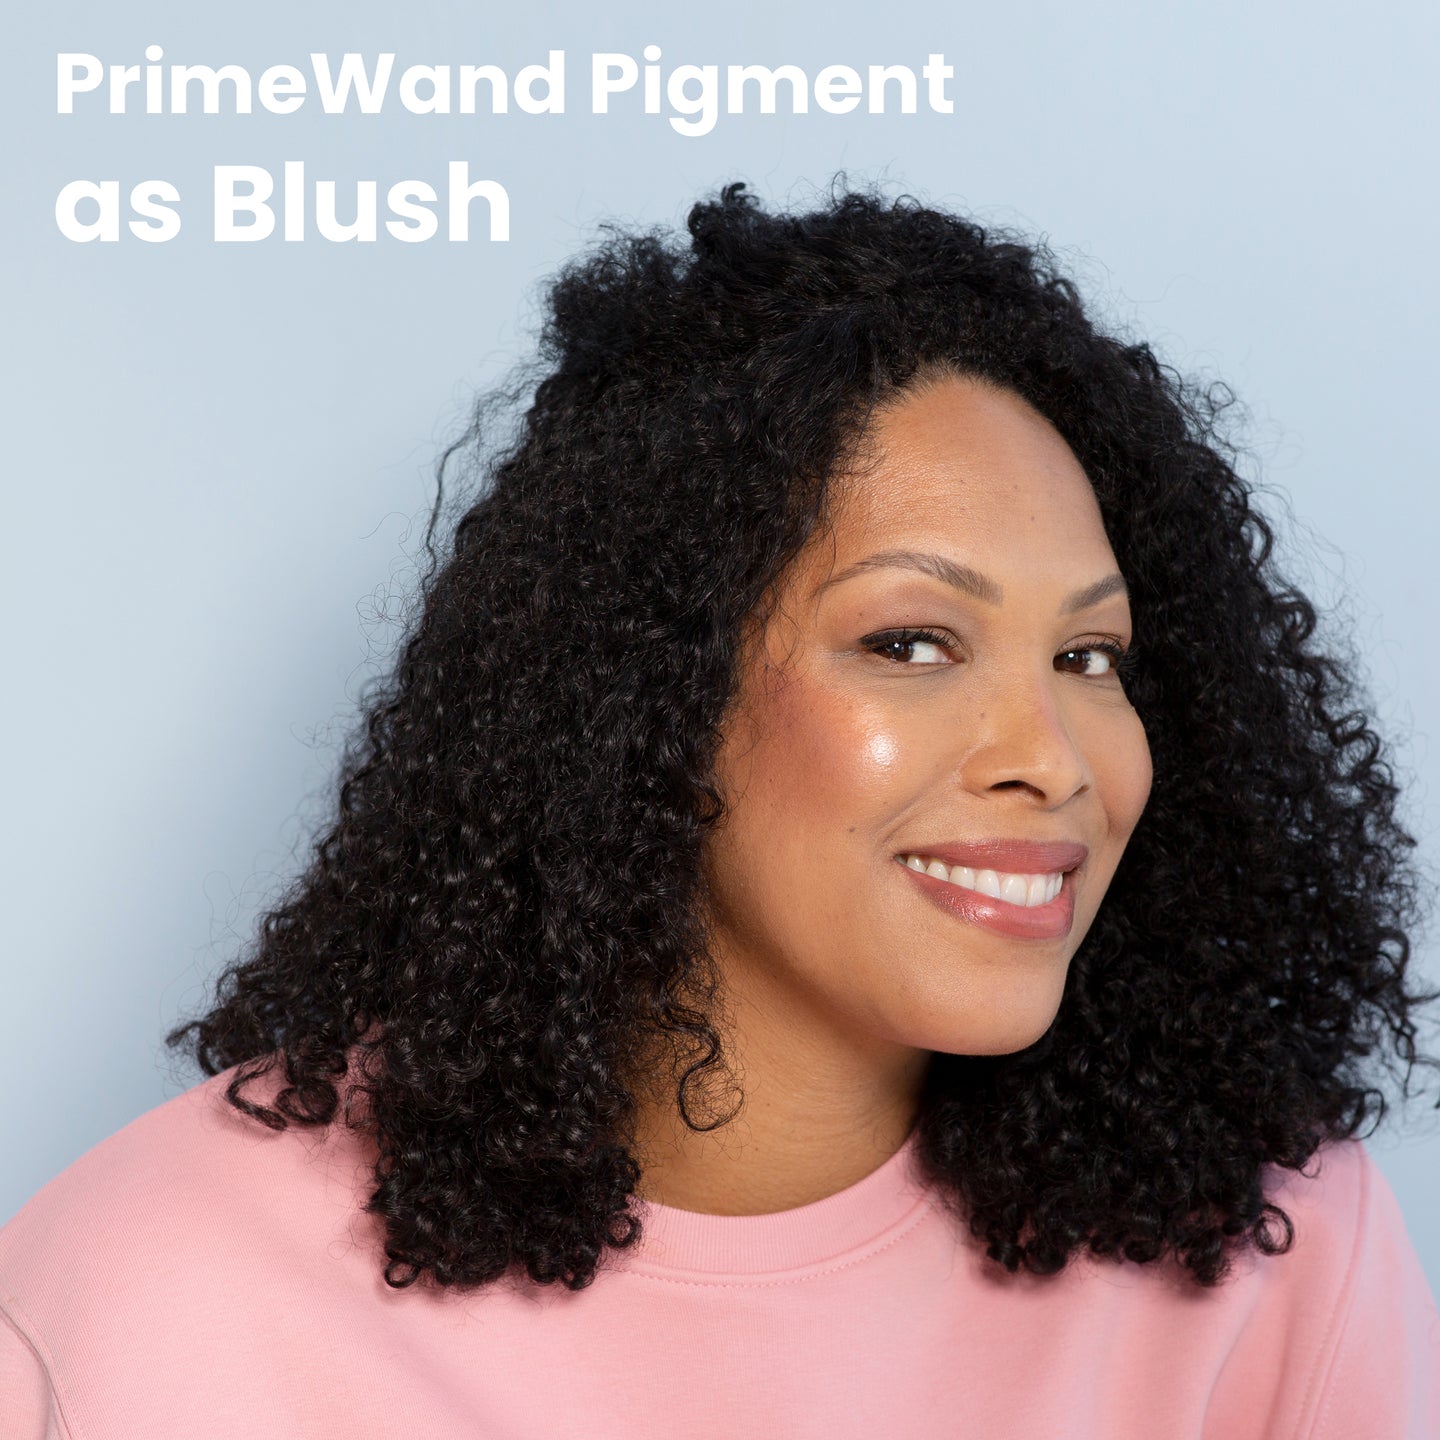 PrimeWand Pigment